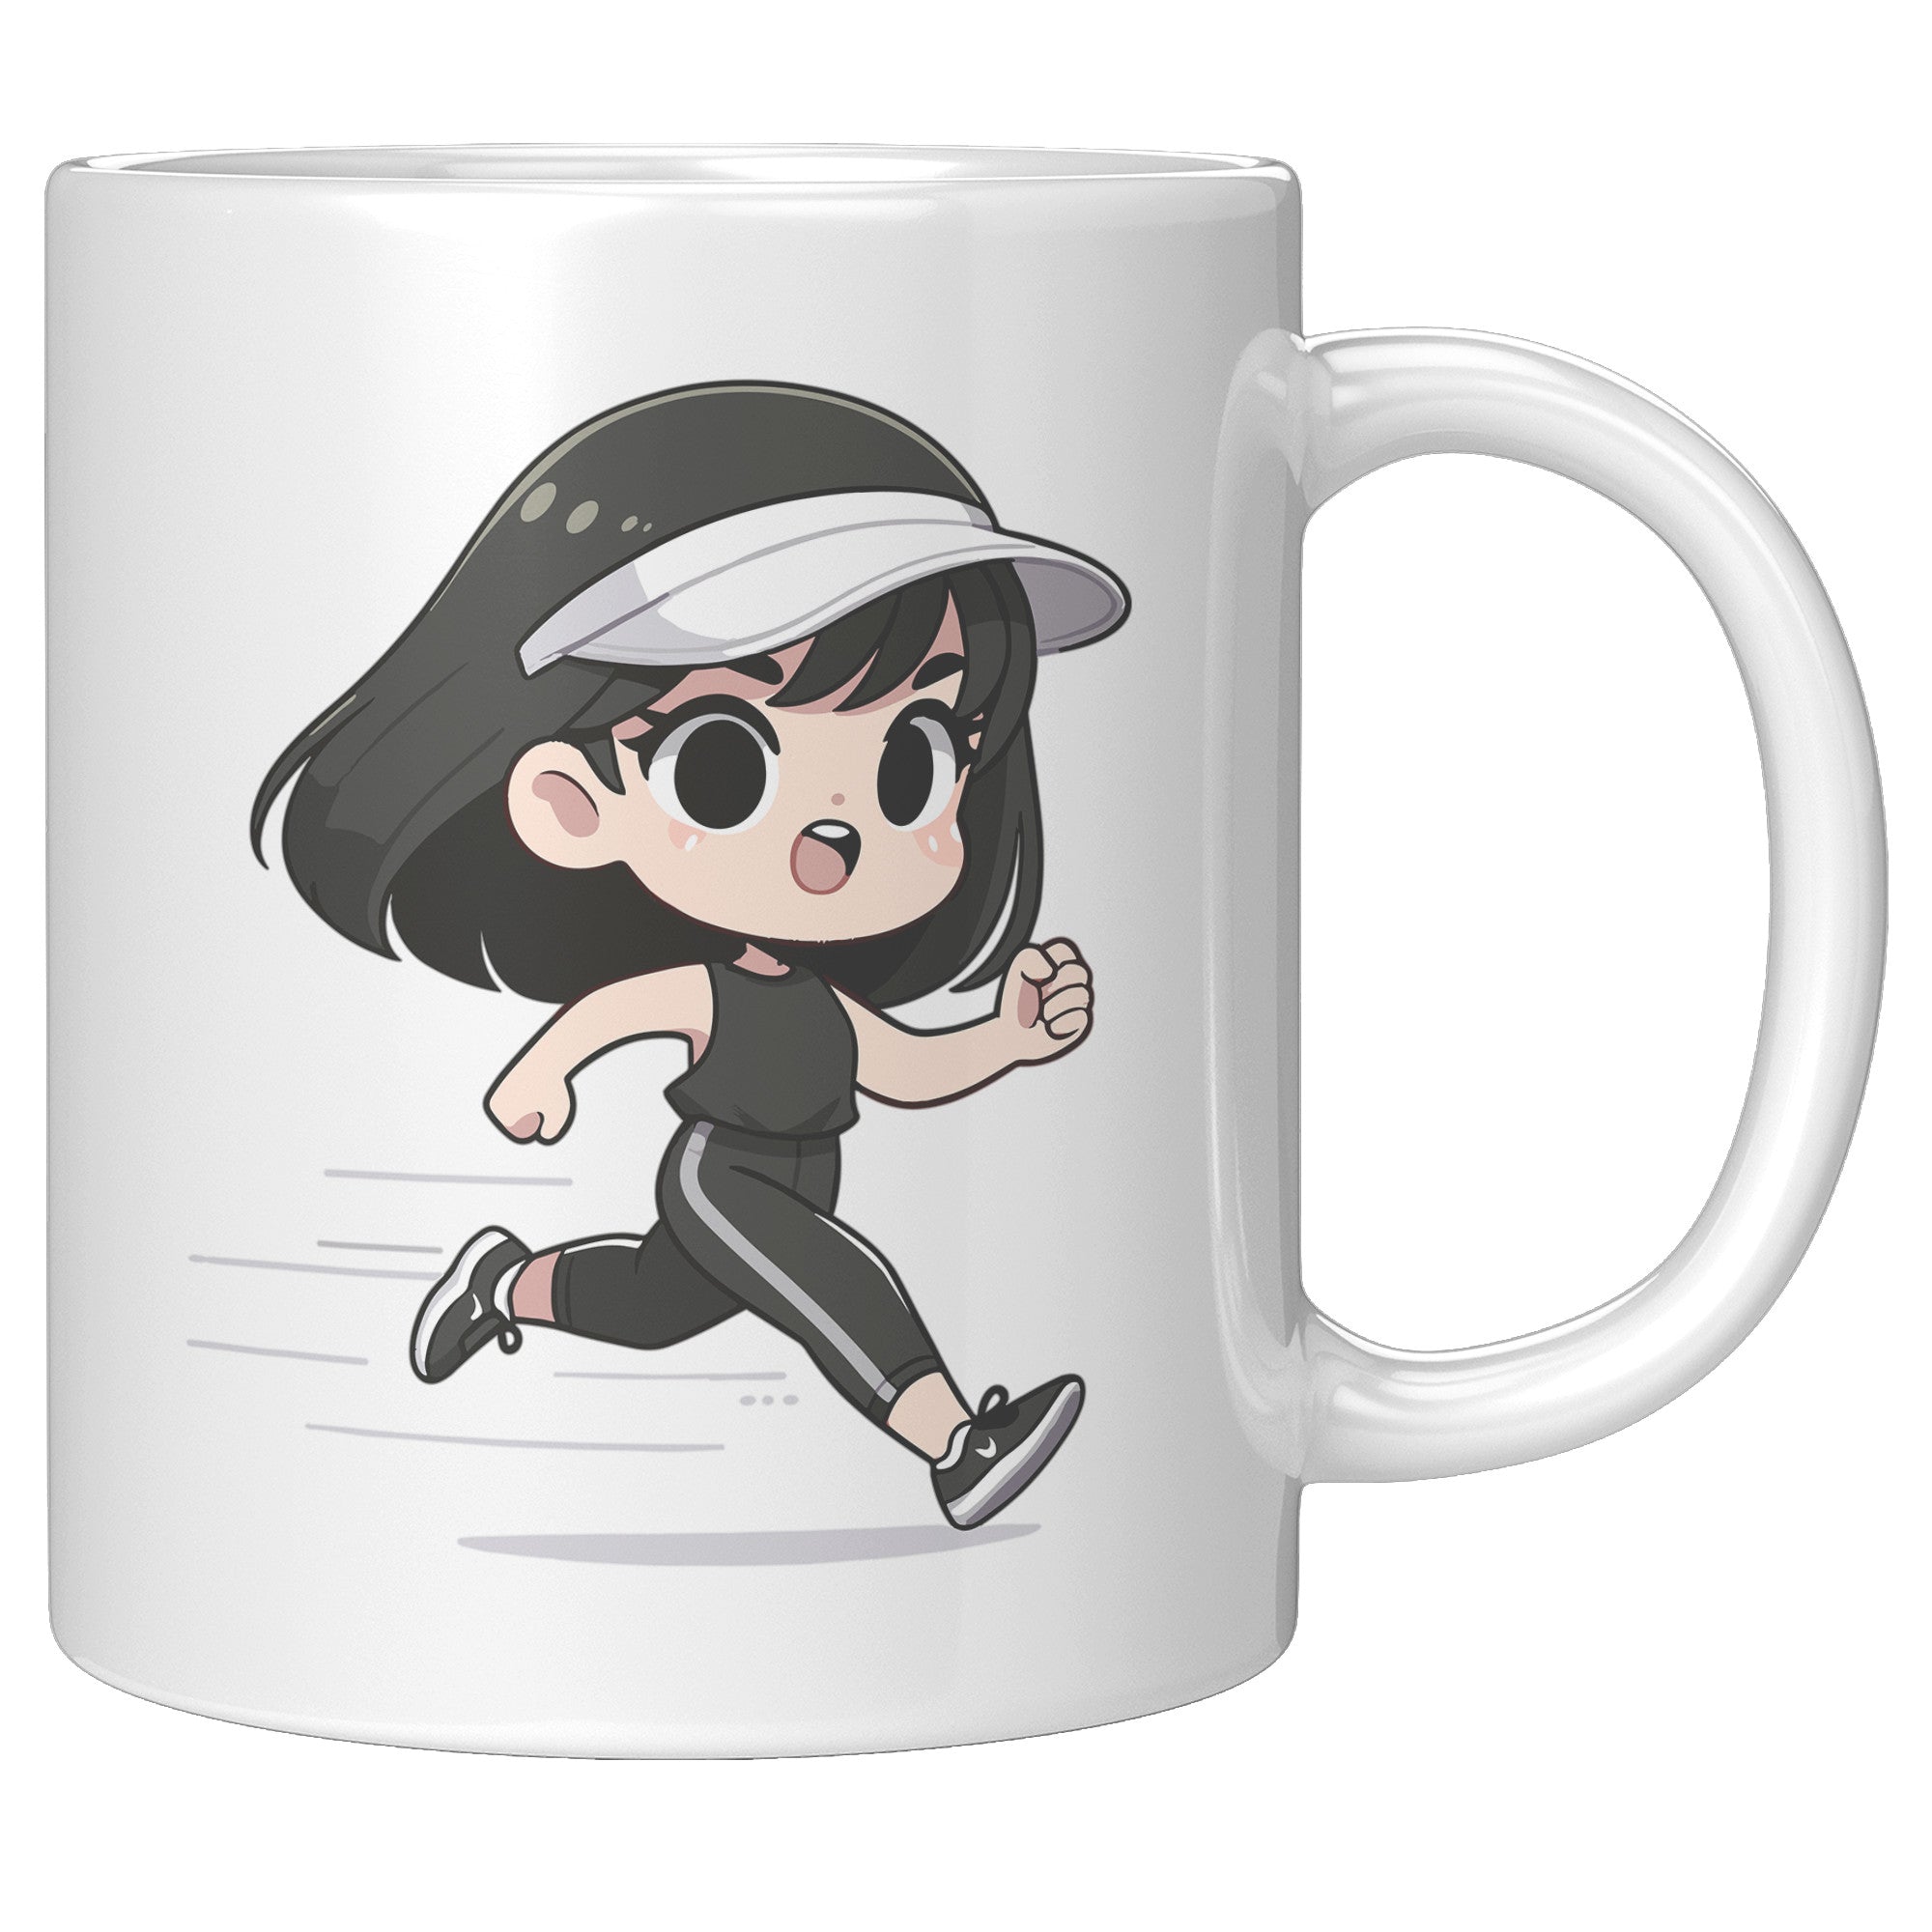 "Female Runner Coffee Mug - Inspirational Running Quotes Cup - Perfect Gift for Women Runners - Motivational Marathoner's Morning Brew" - D